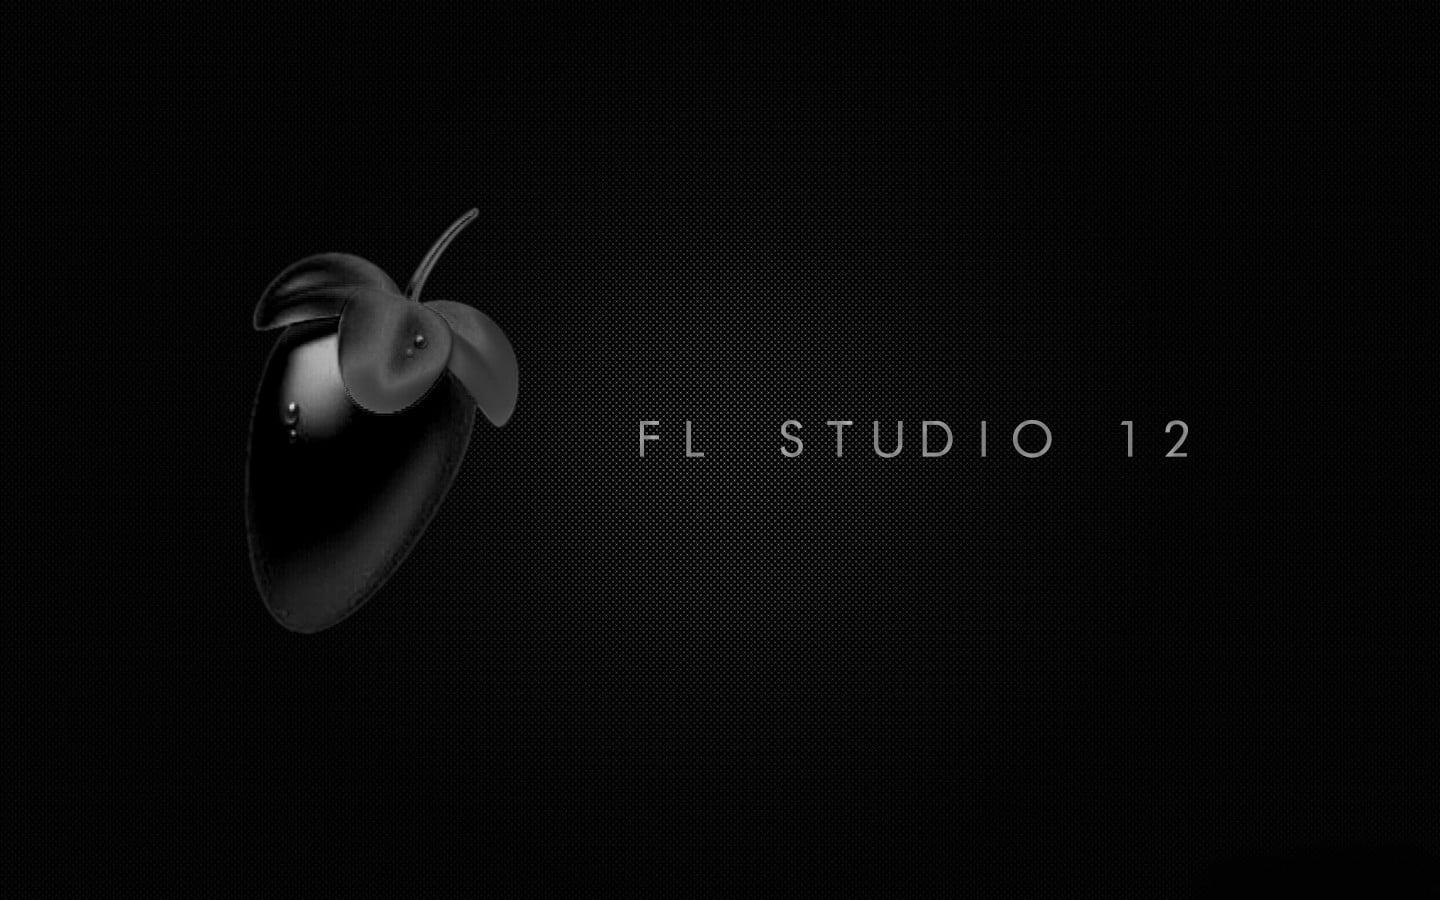 fl studio logo hd wallpaper